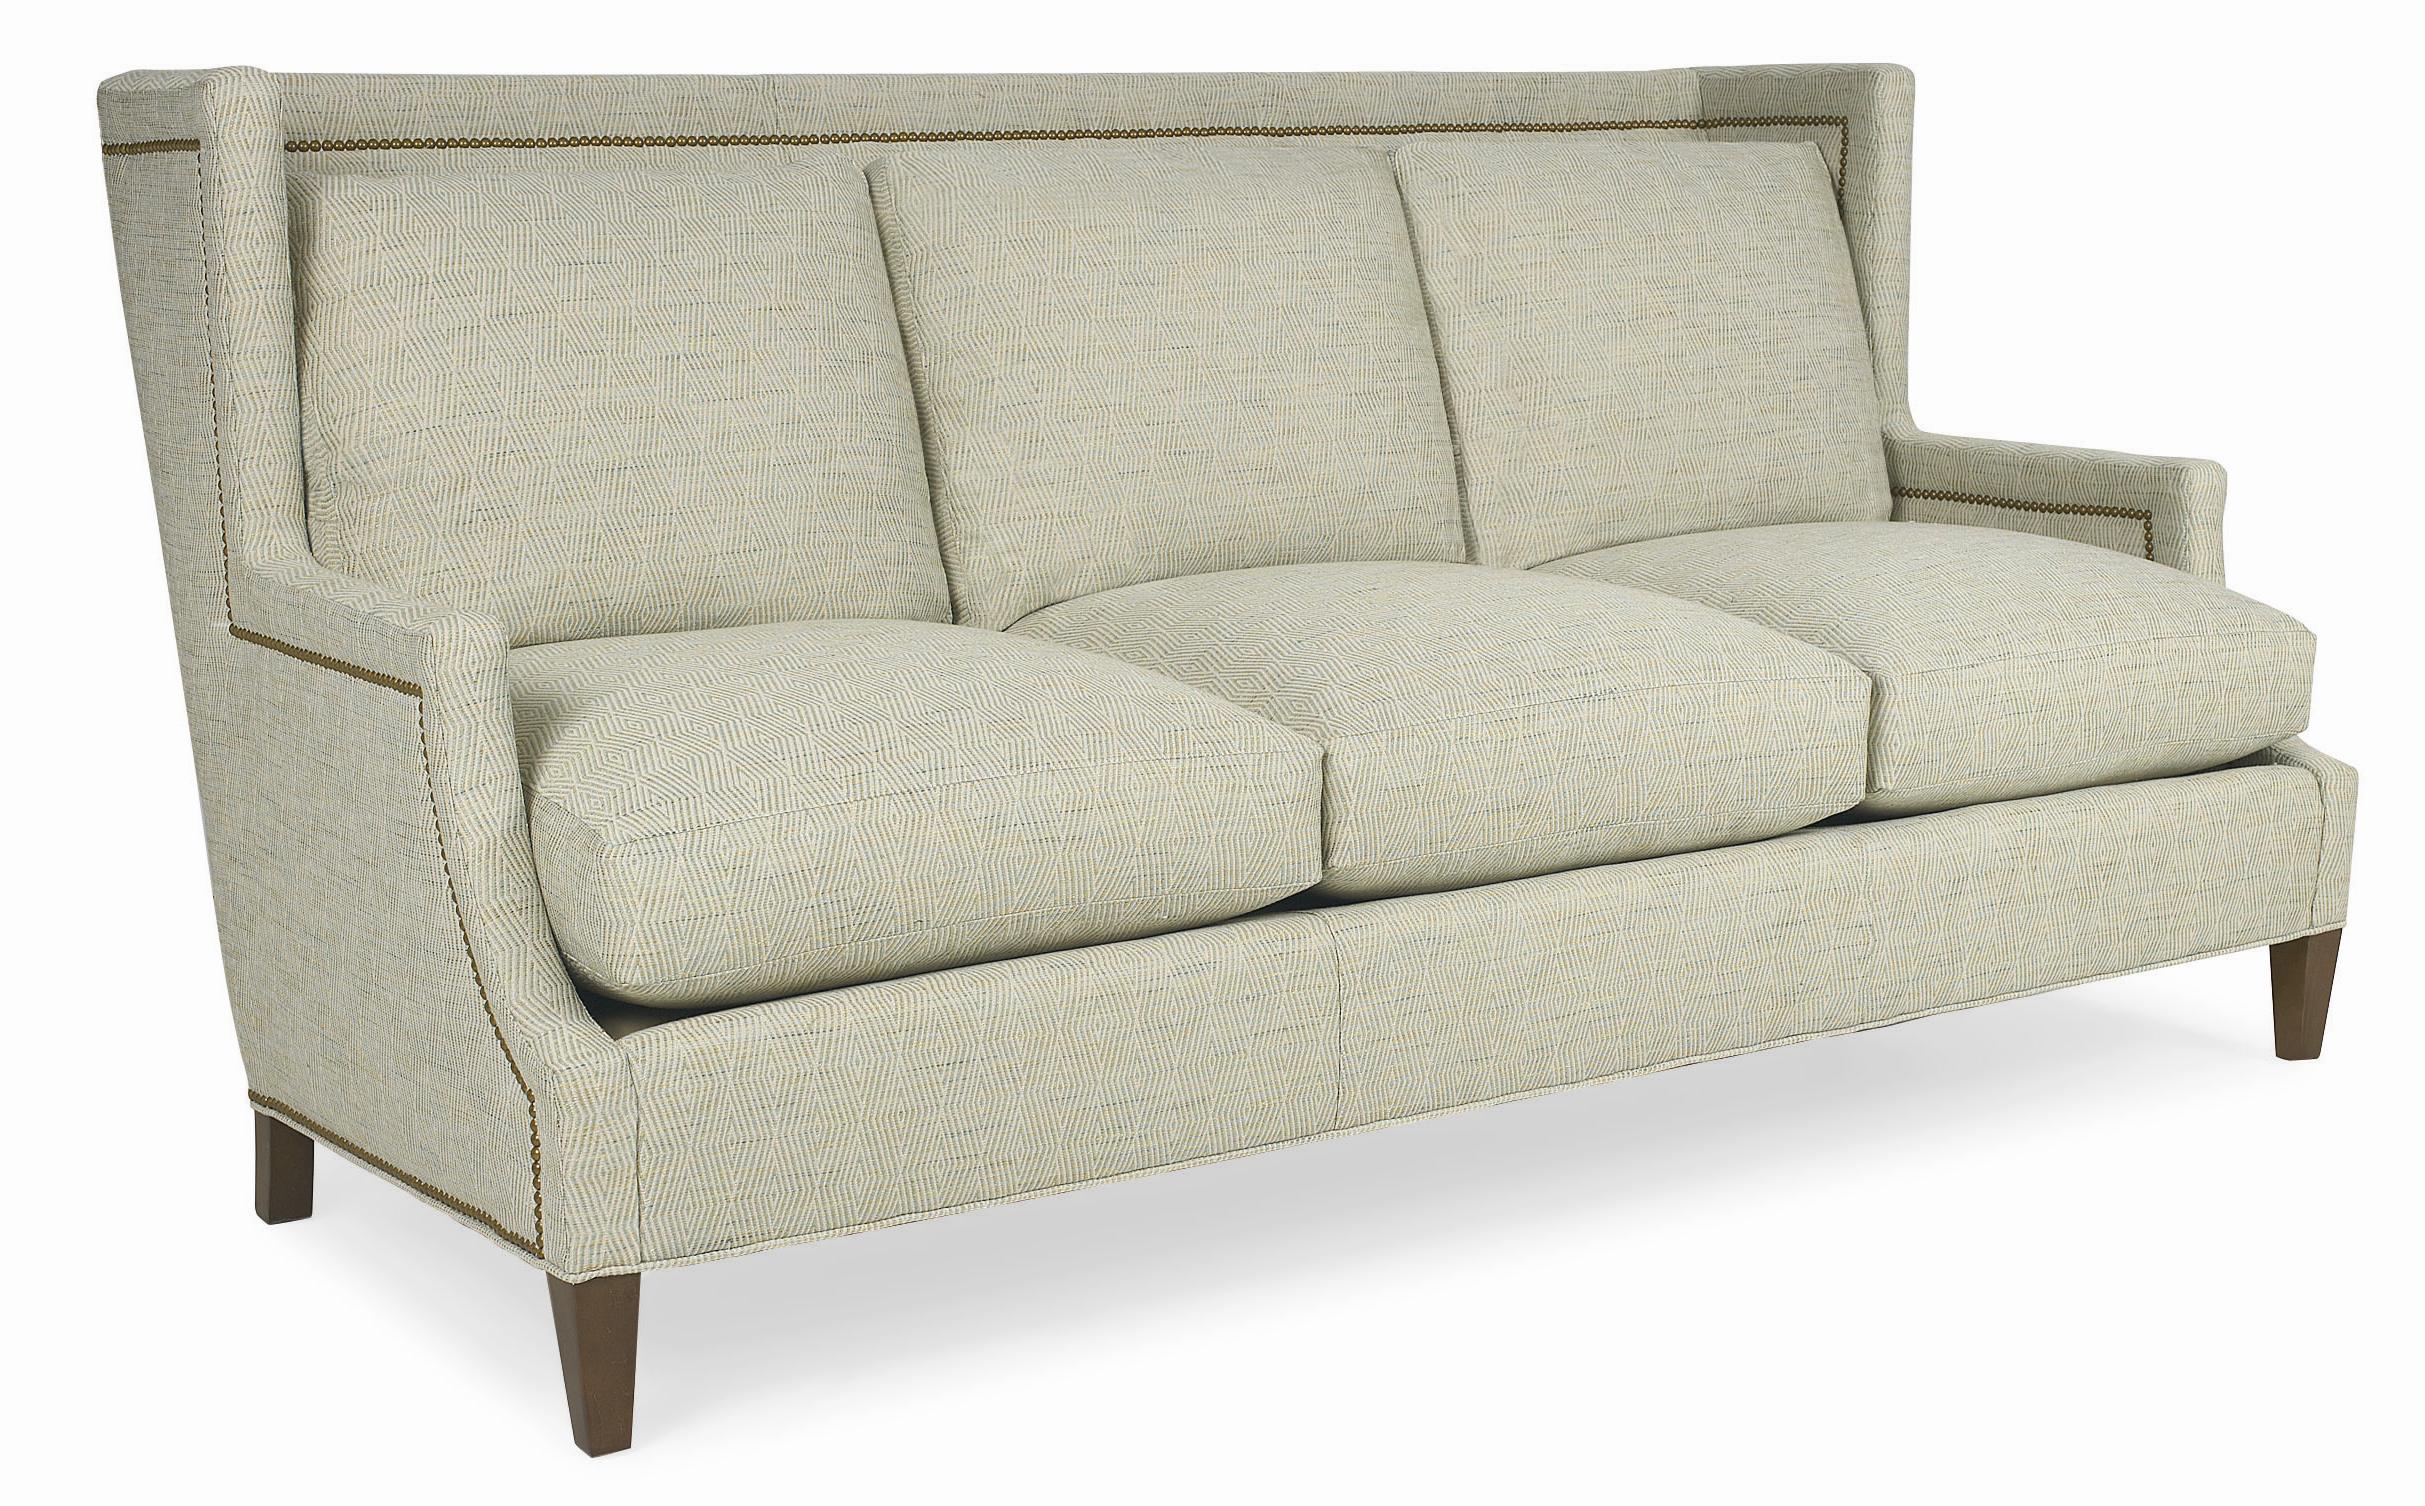 Geometric Contemporary Sofa with Nailhead Trim